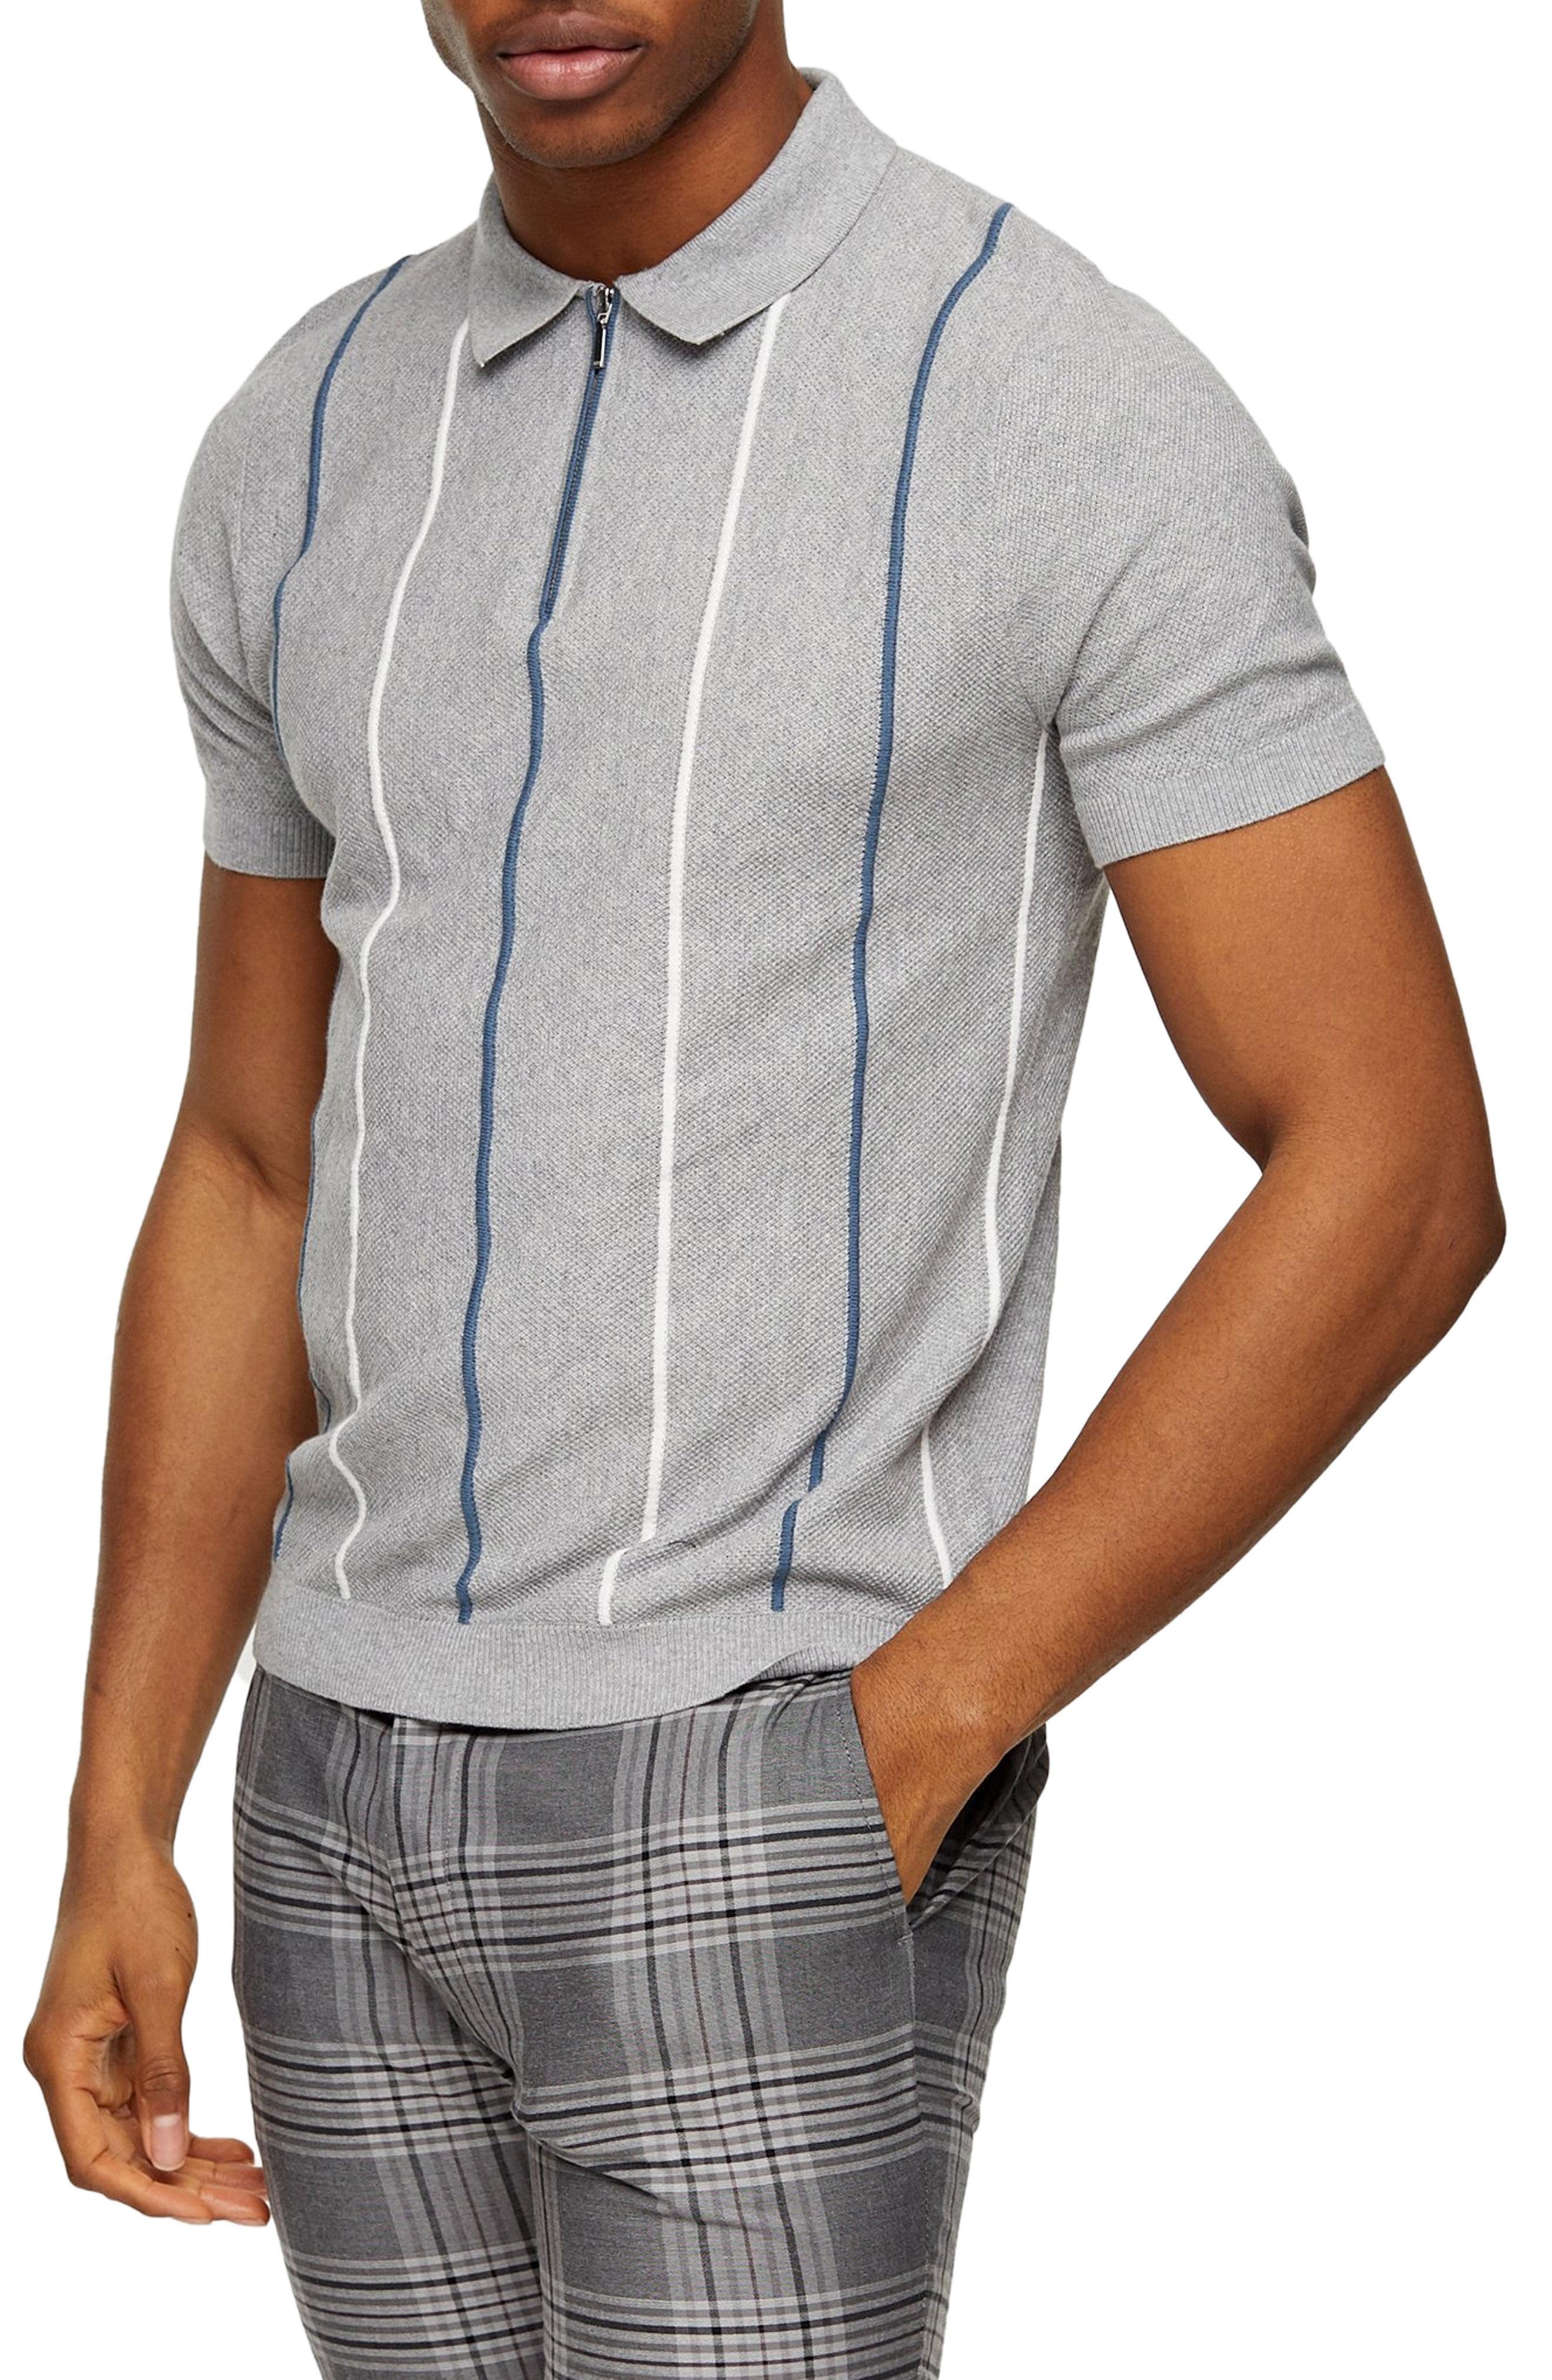 TOPMAN Cotton Stripe Piqué Zip Polo in Gray for Men - Lyst